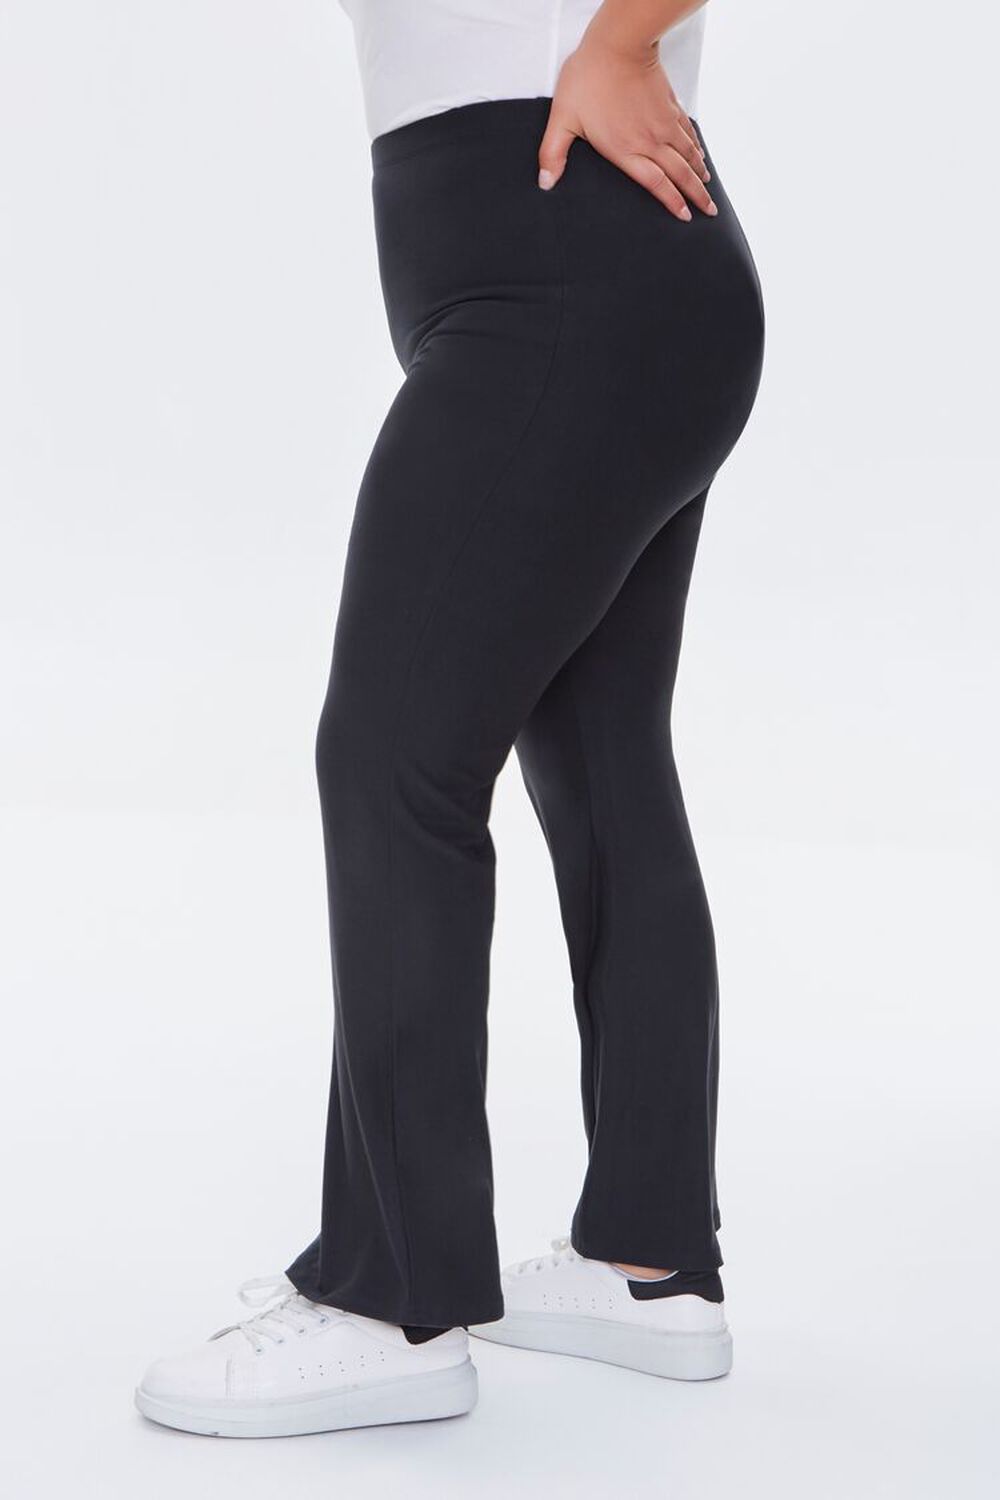 BLACK Plus Size Flare Pants, image 3